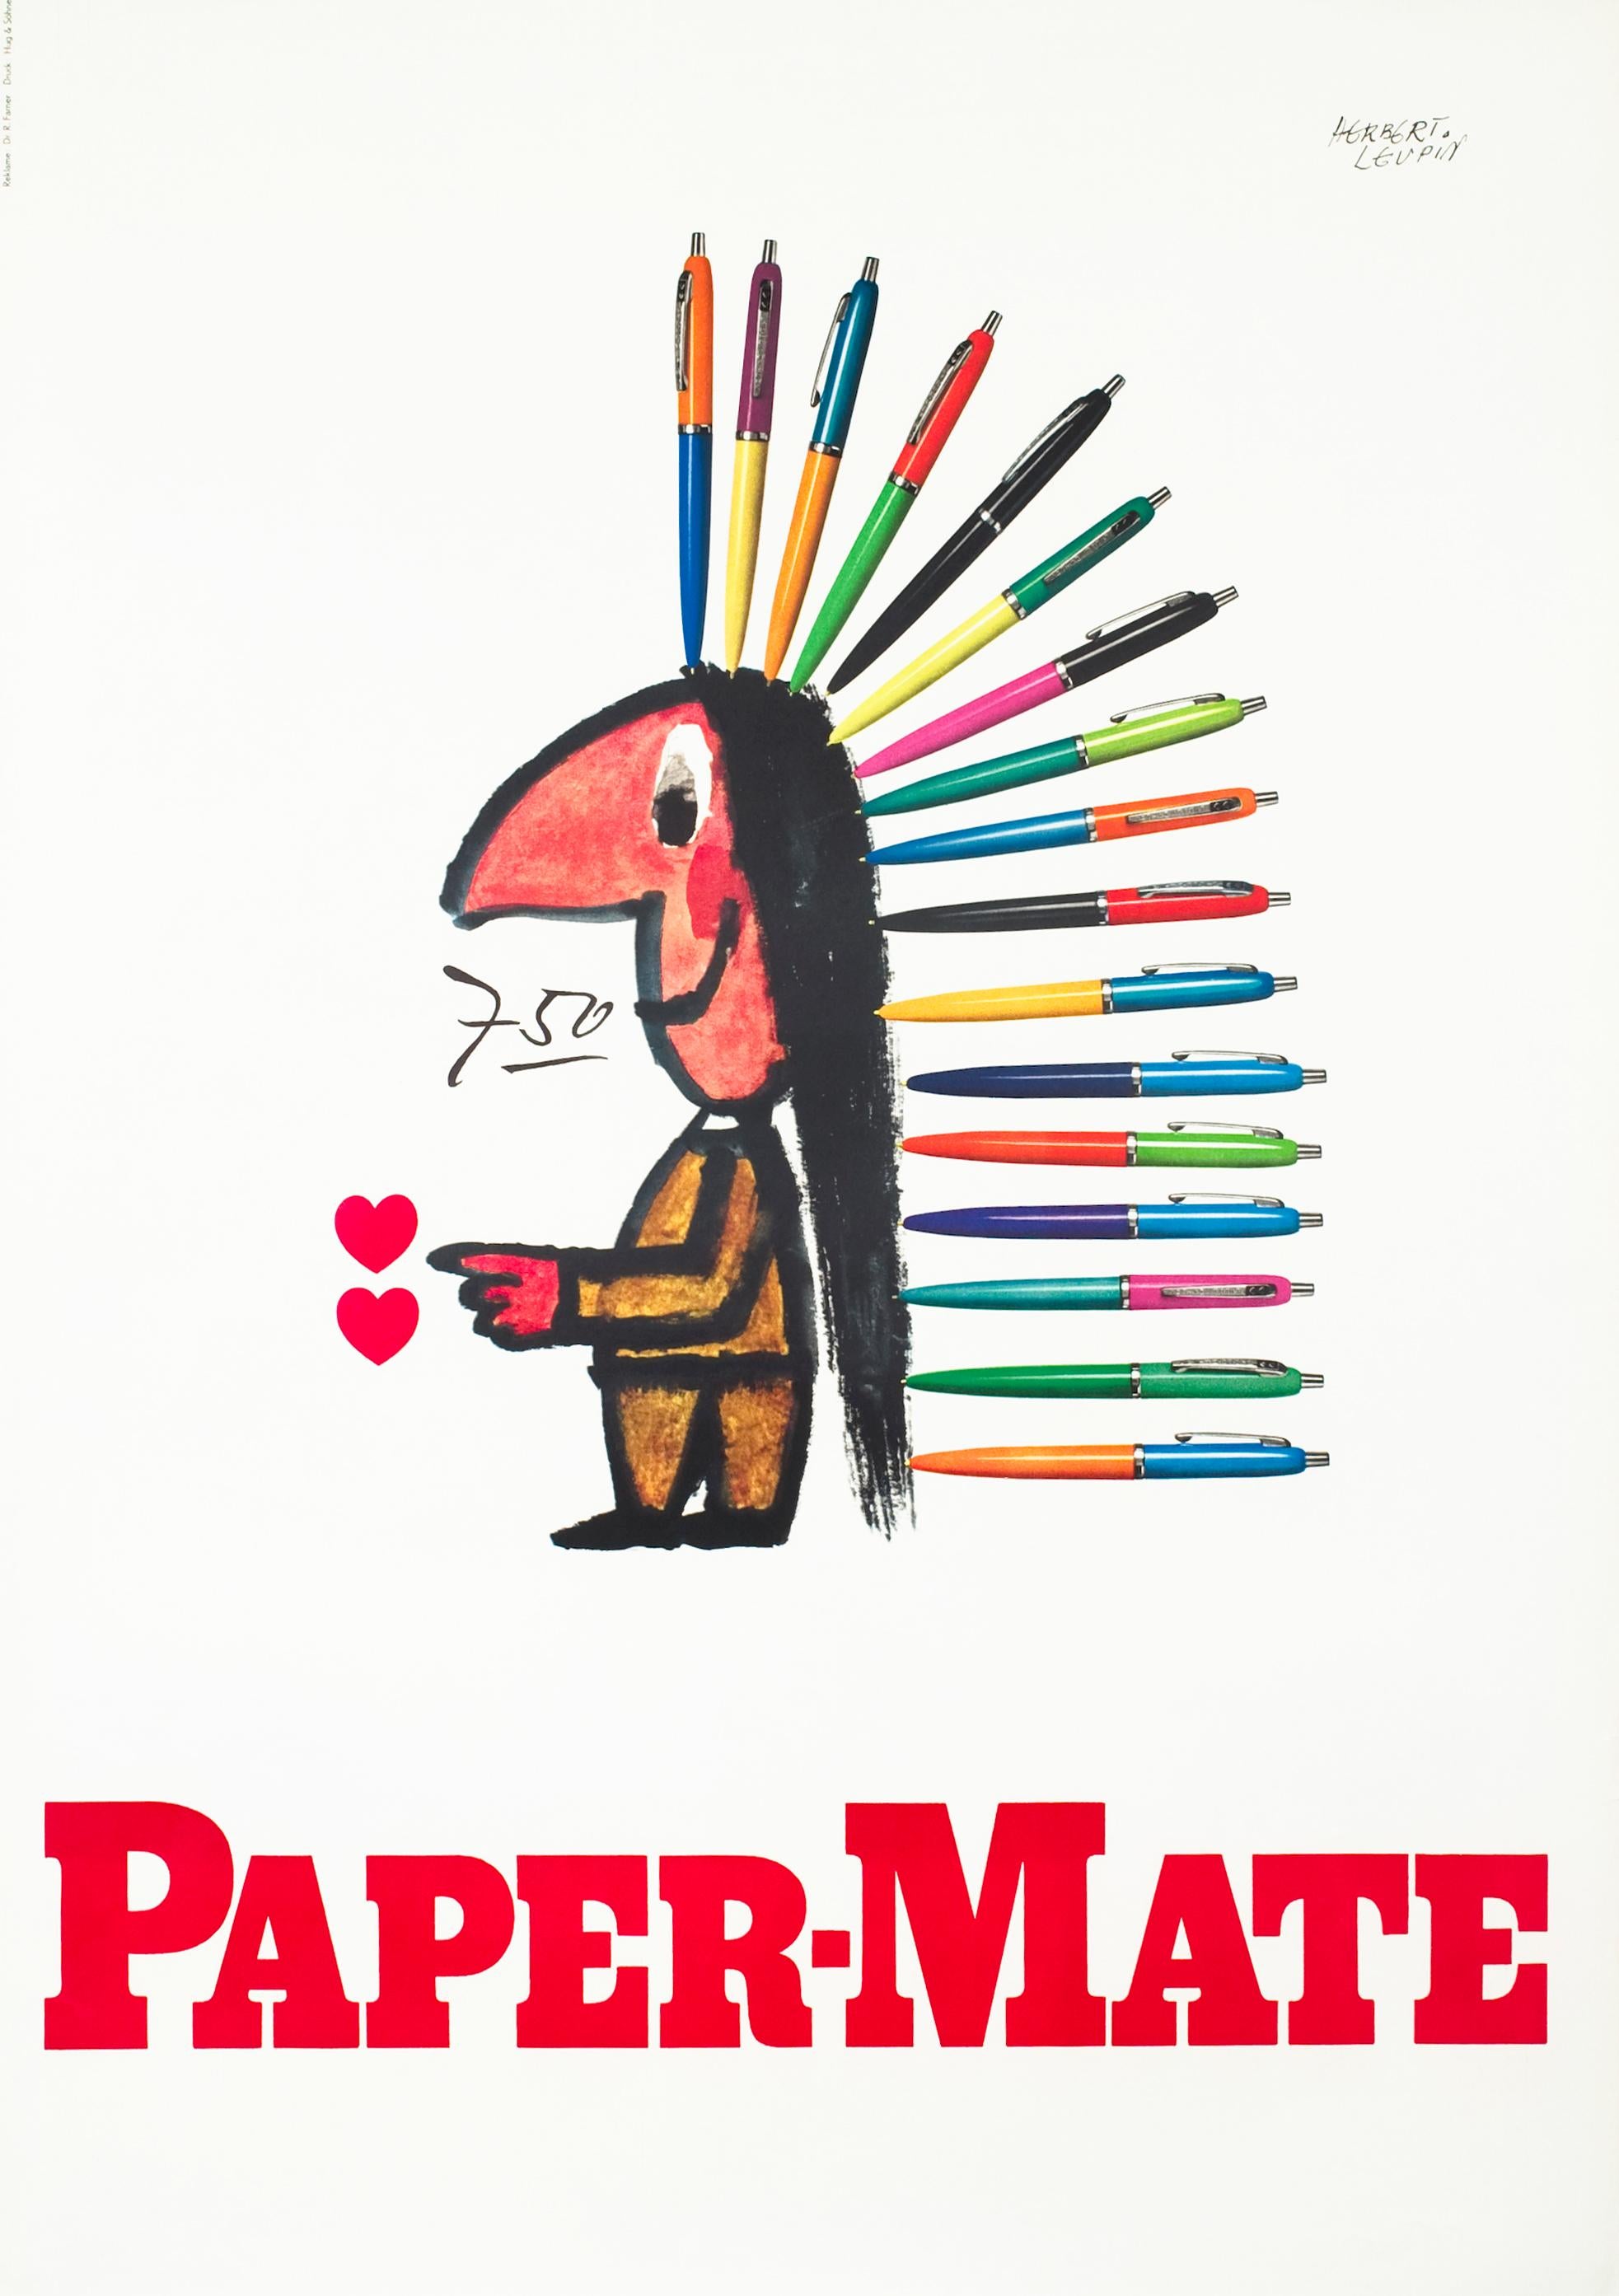 "Paper-Mate" Mid-Century Writing Pen Headdress Original Vintage Poster - Print by Herbert Leupin